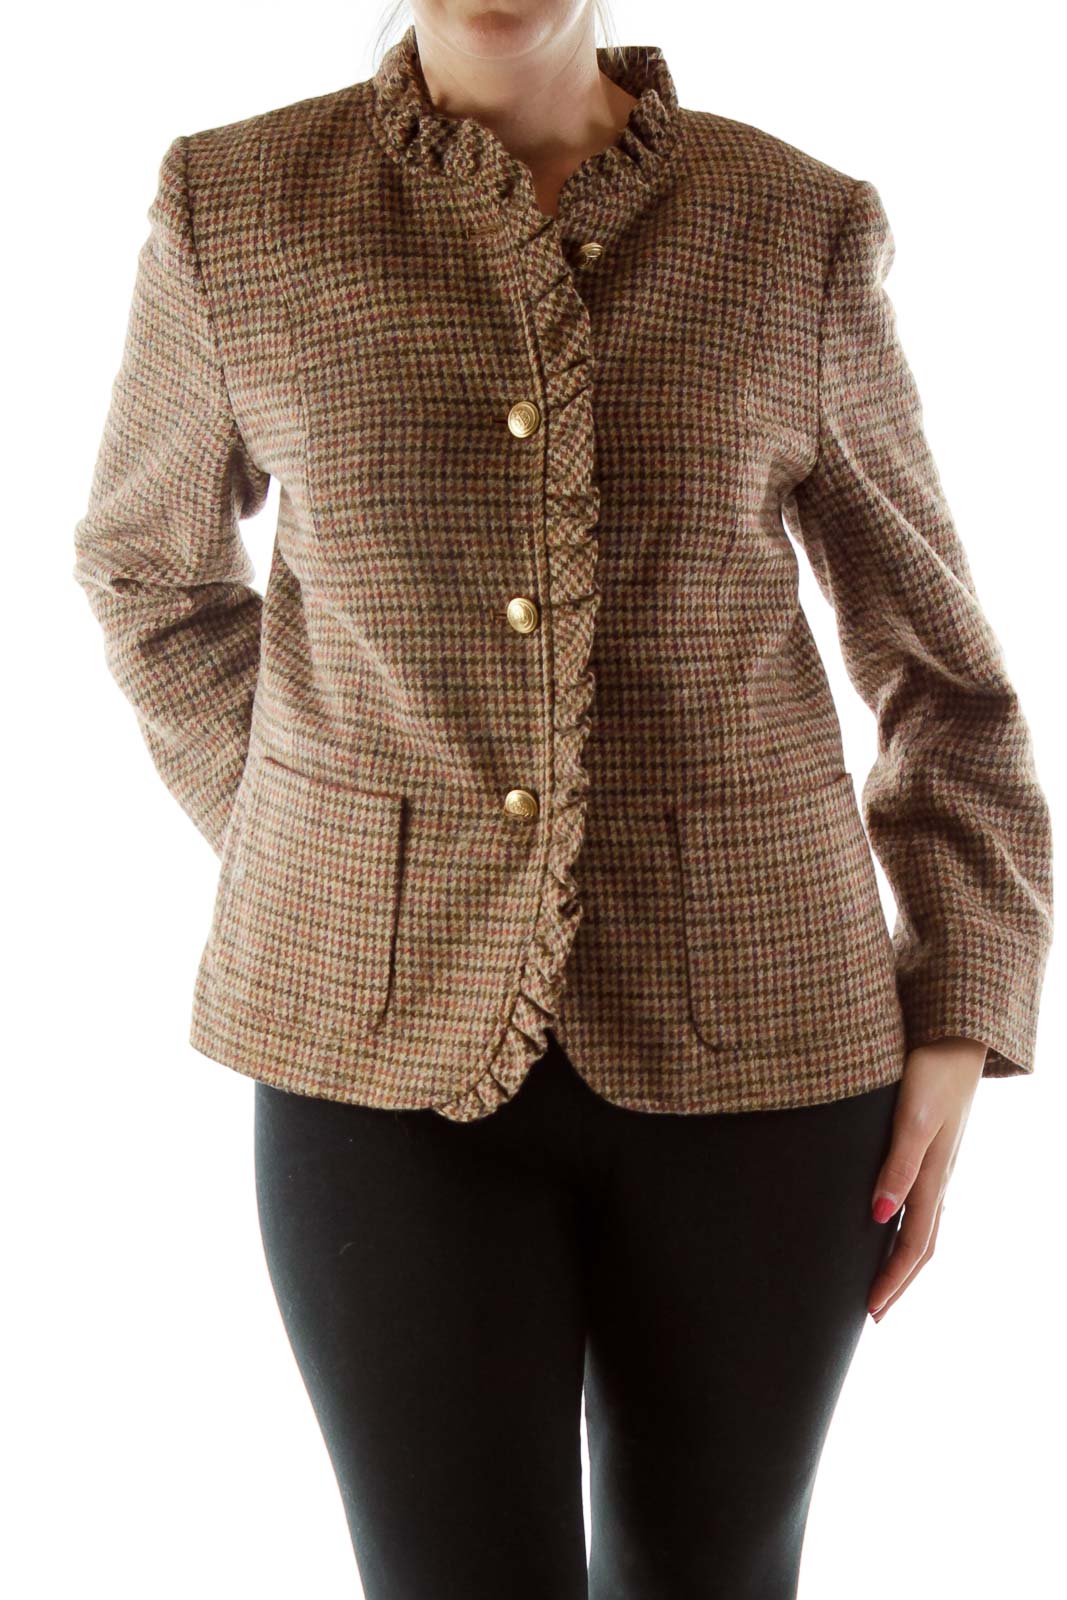 Talbots - Brown Houndstooth Ruffled Tweed Jacket Polyester Wool Viscose